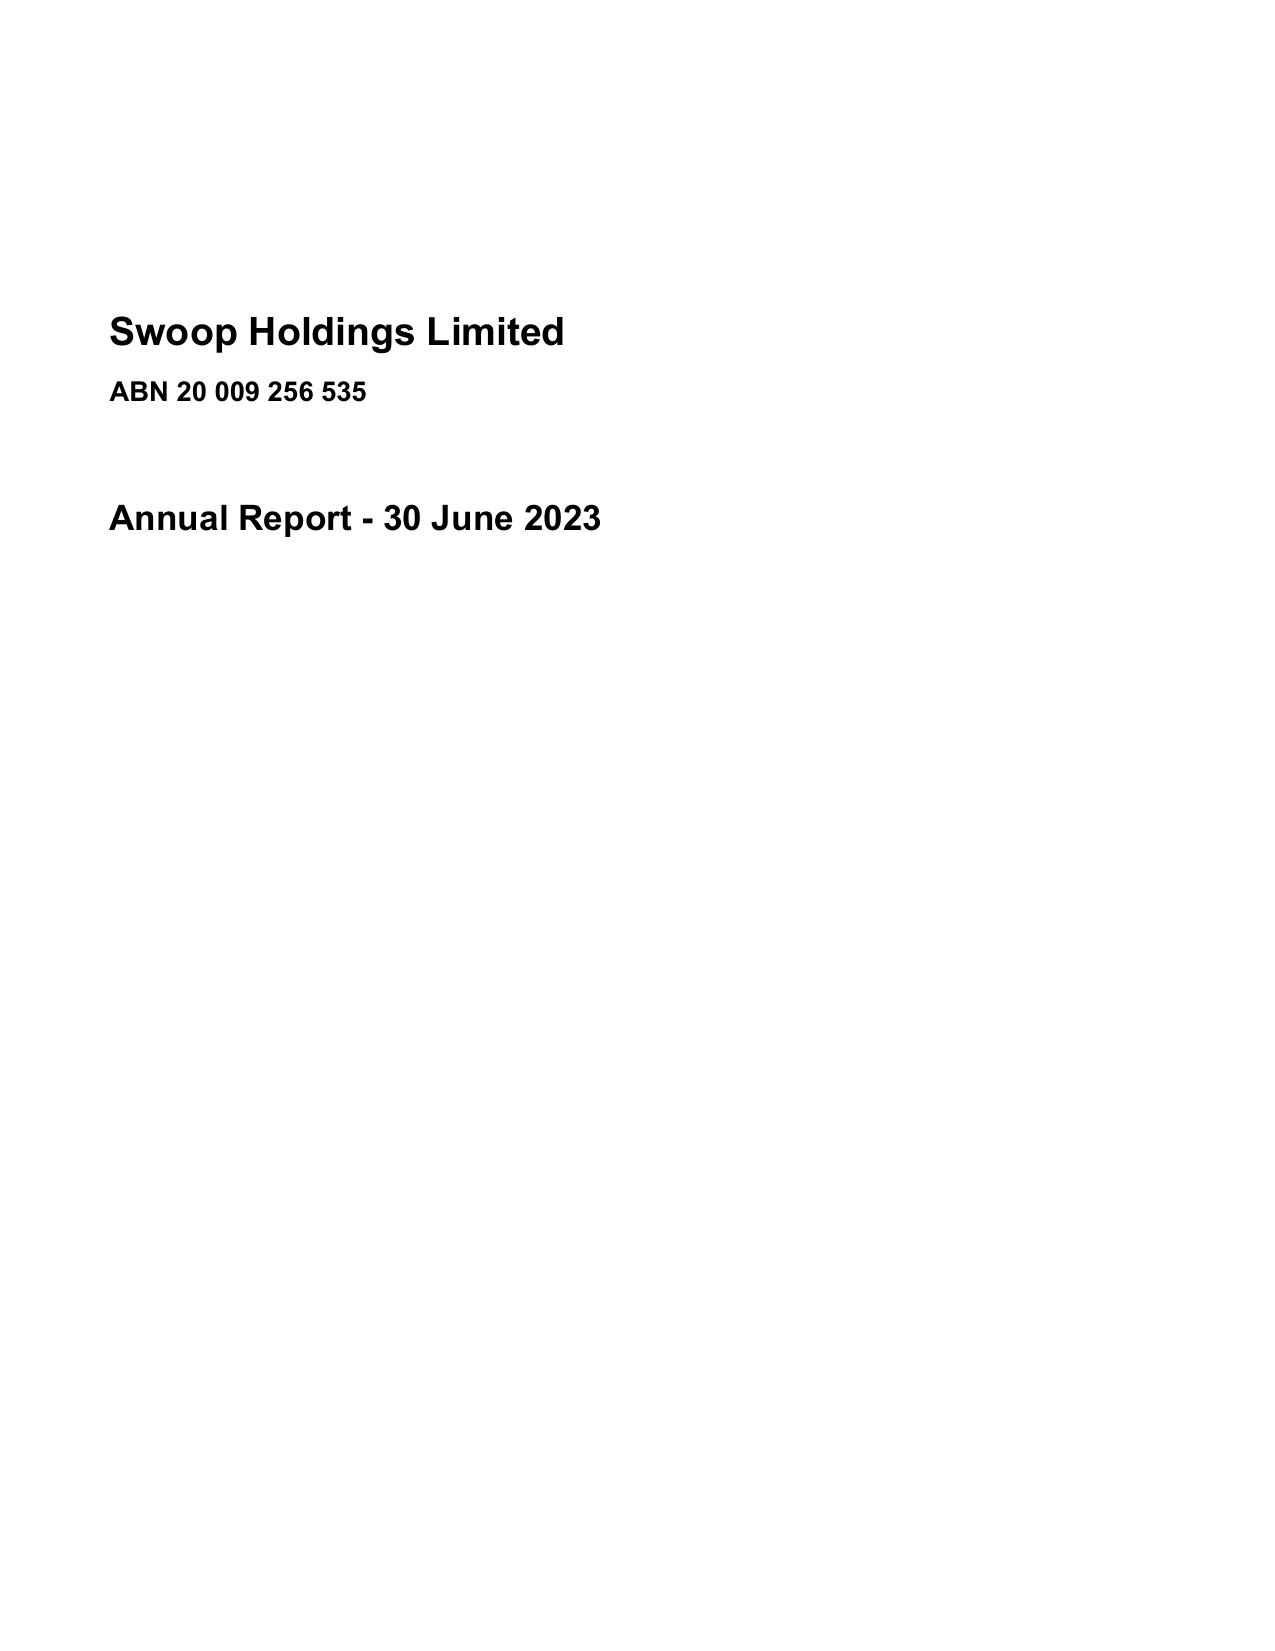 SWOOP 2023 Annual Report